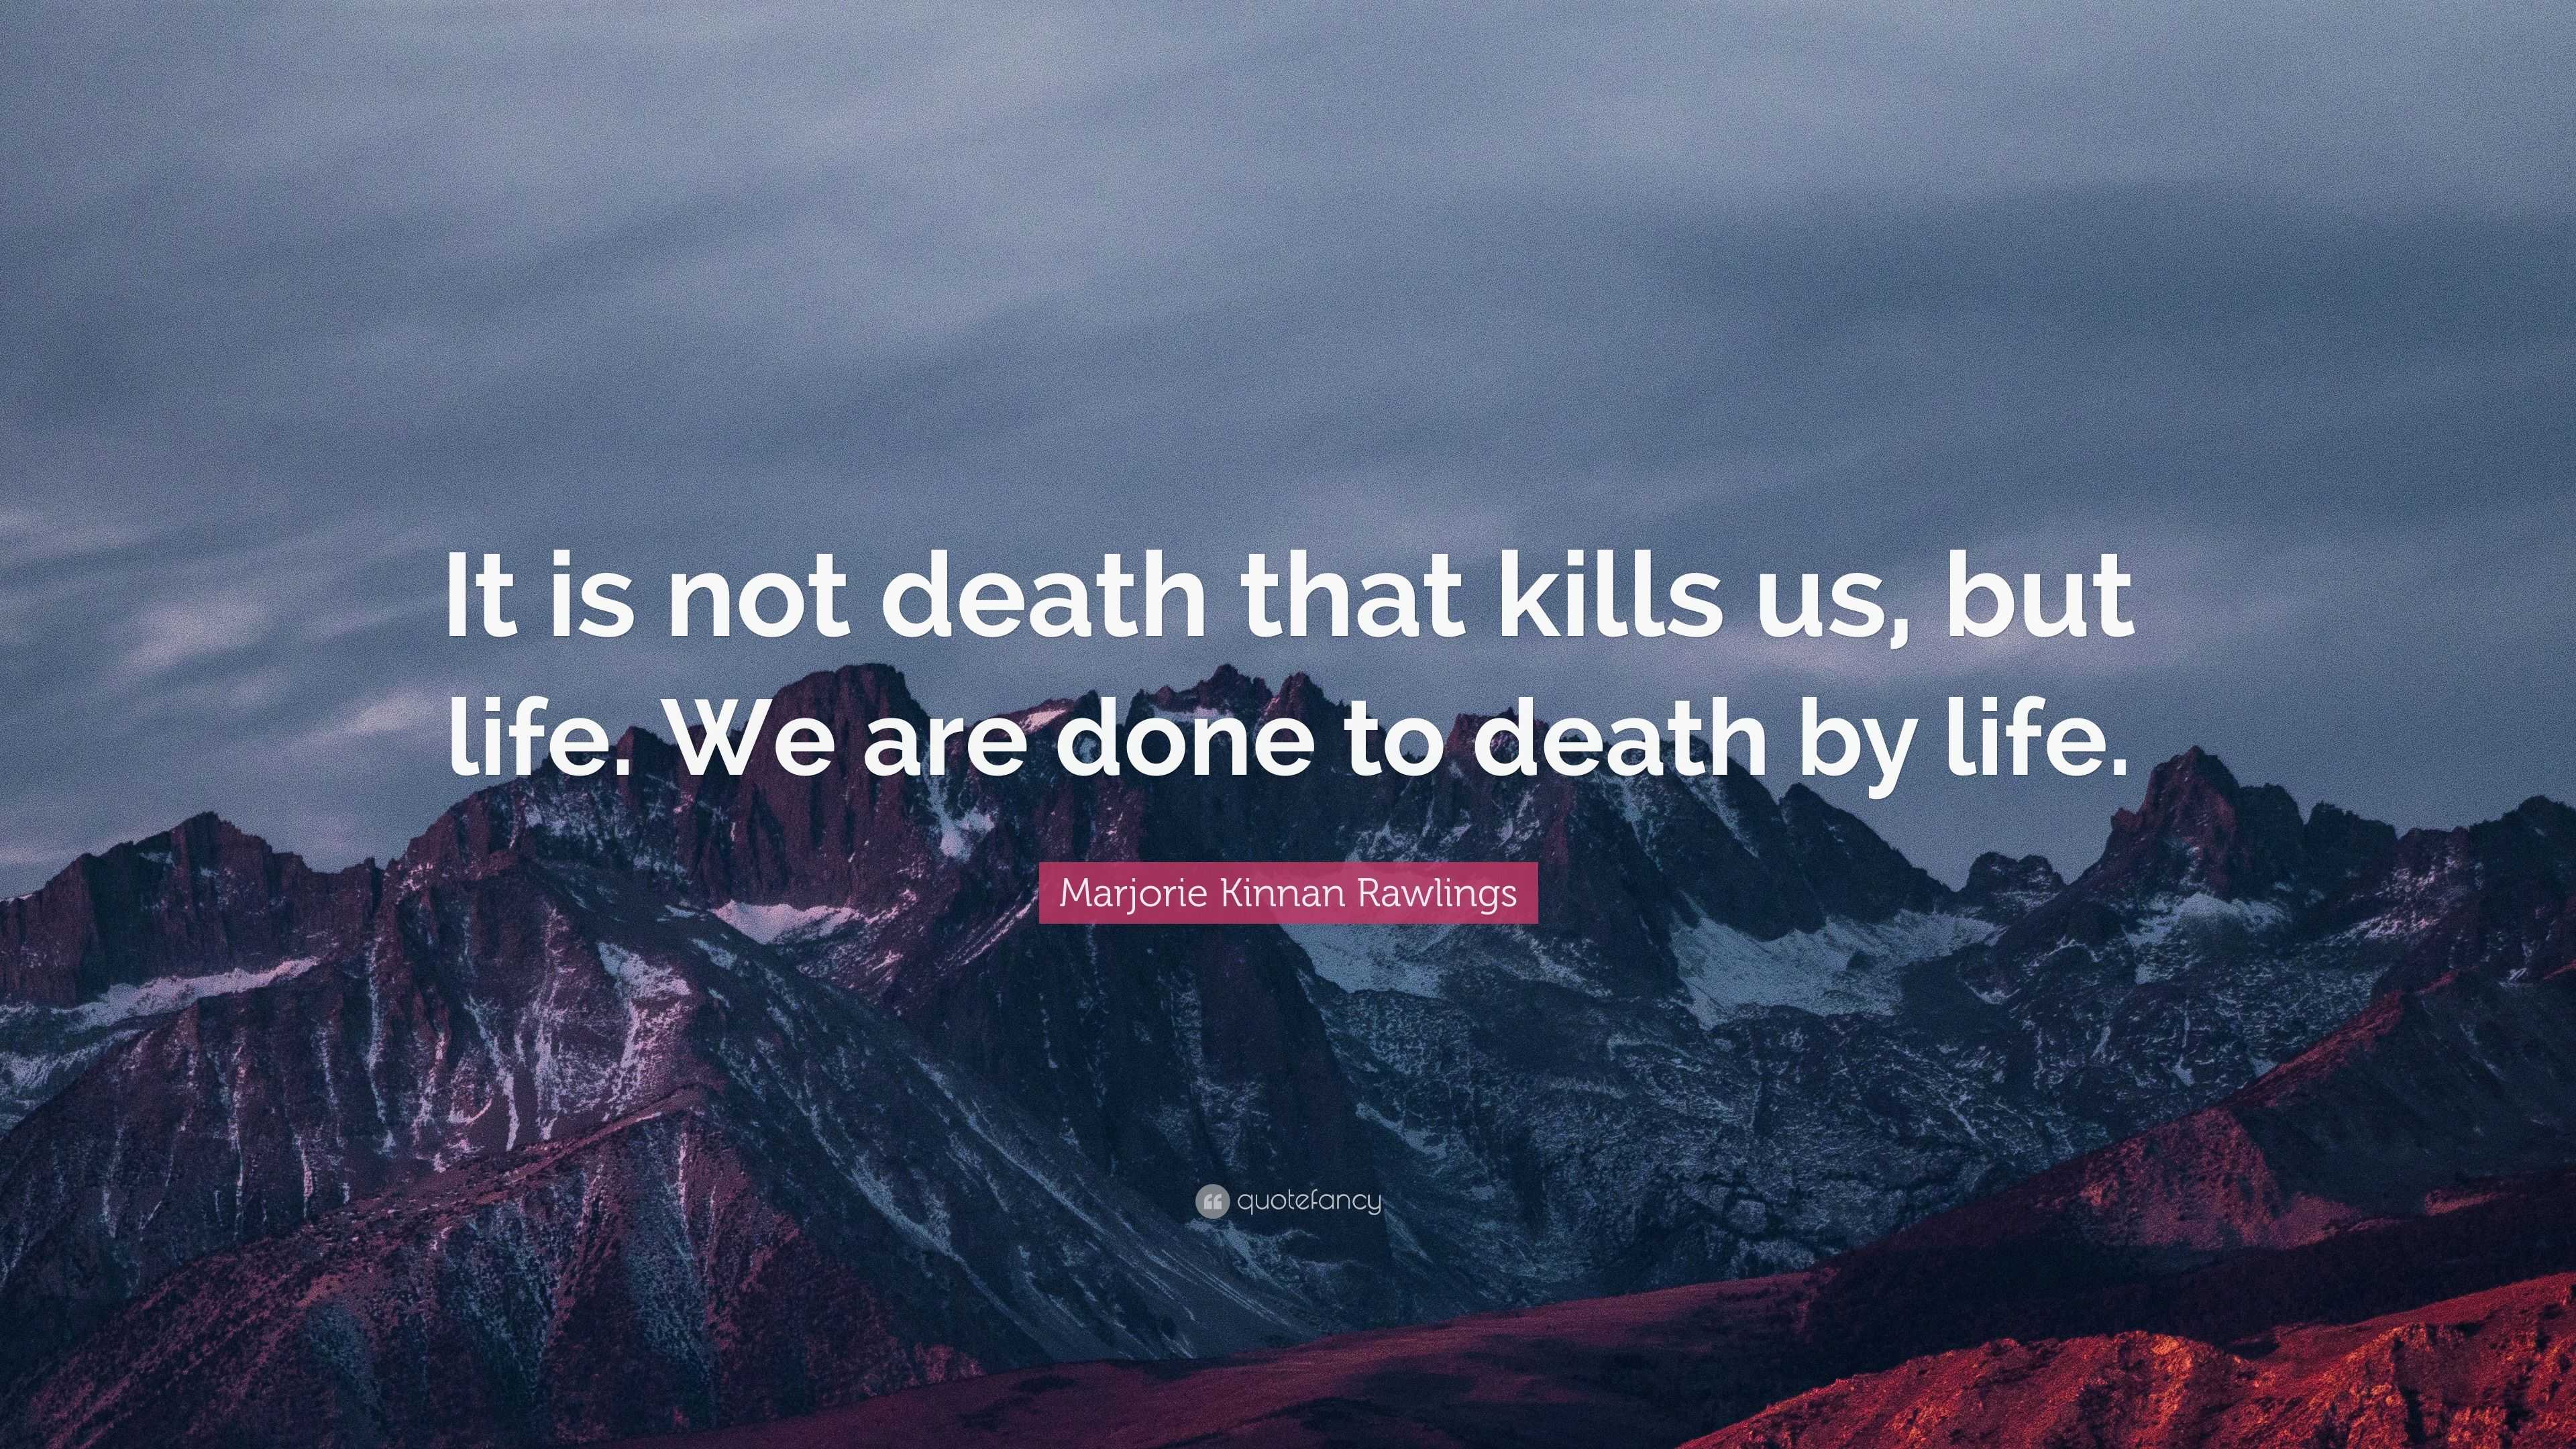 Marjorie Kinnan Rawlings Quote: “It is not death that kills us, but ...